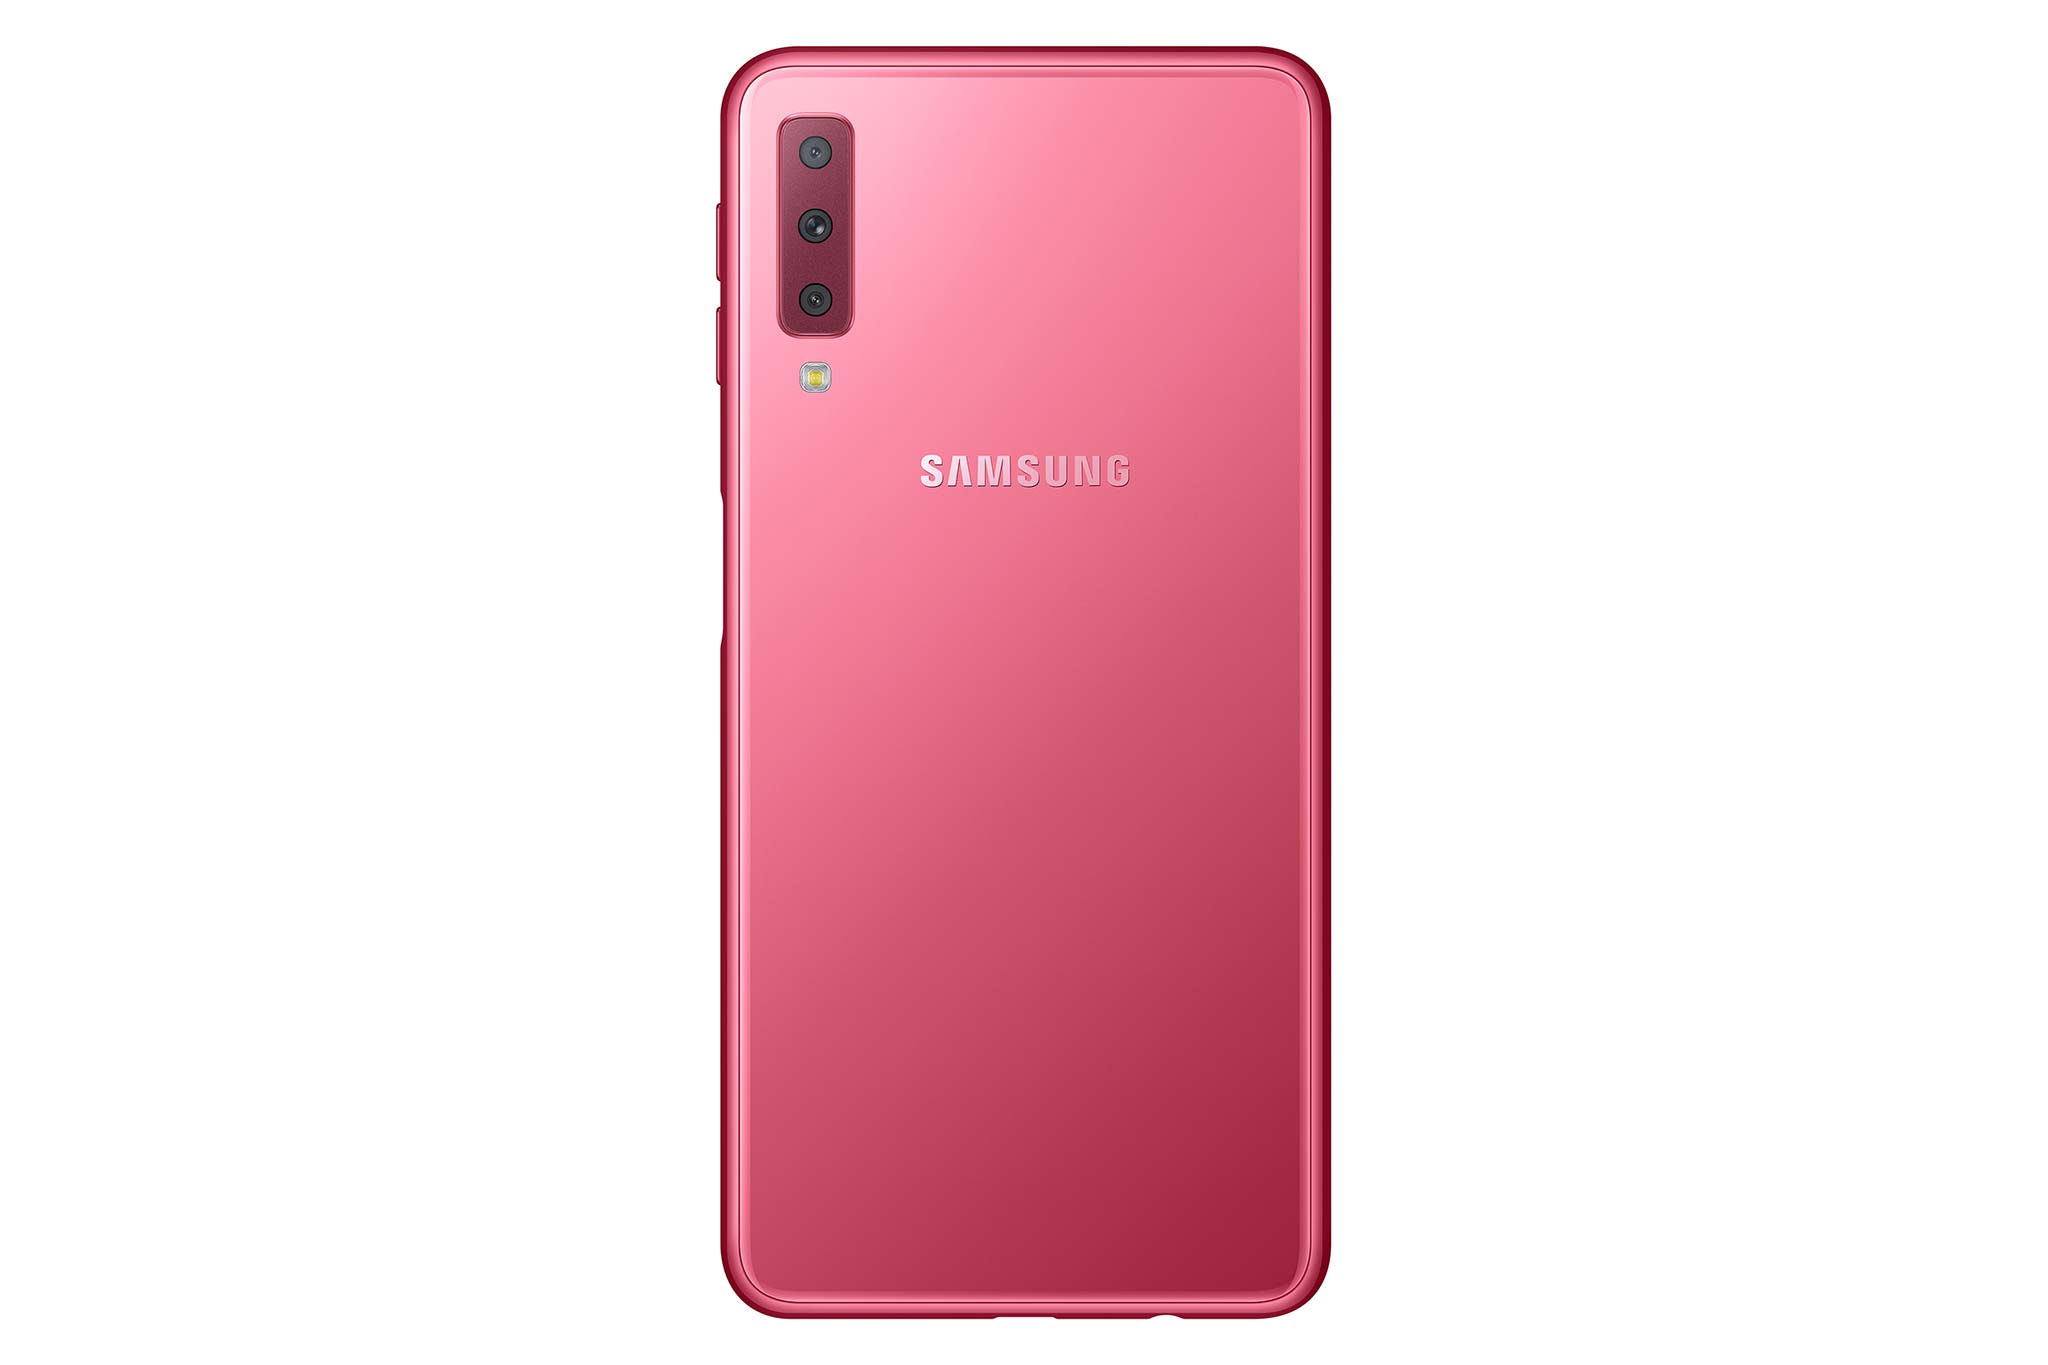 Samsung_Galaxy_A7_2018_2019_tinhte_4.jpg